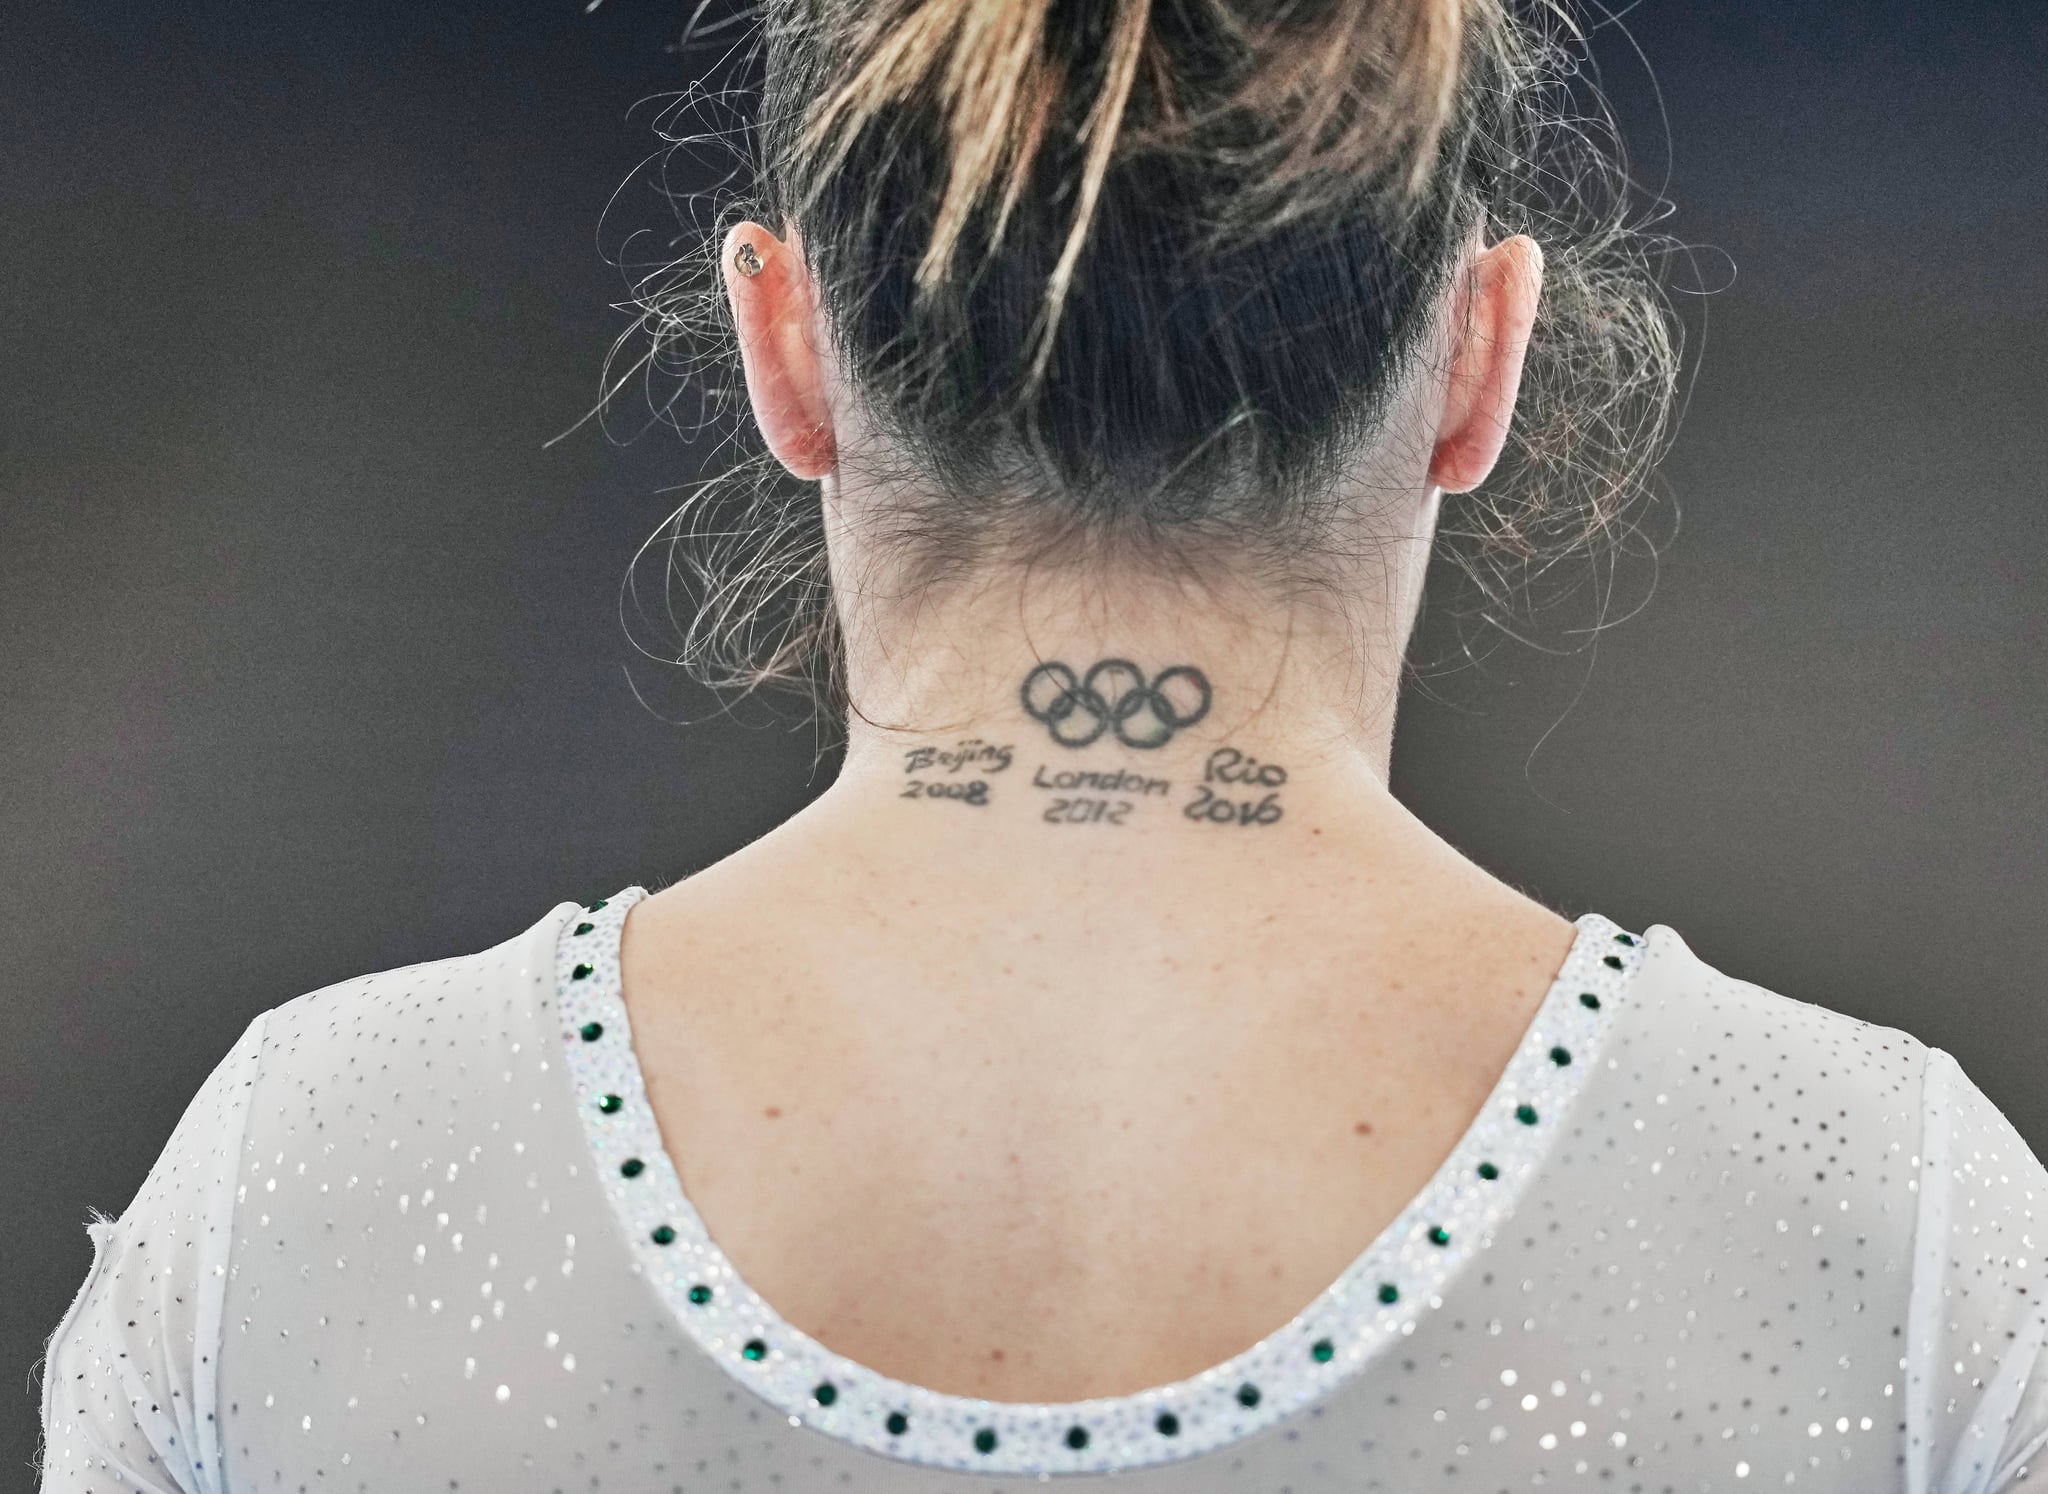 Despite Japan's stigma, tattoos shine at the Tokyo Olympics